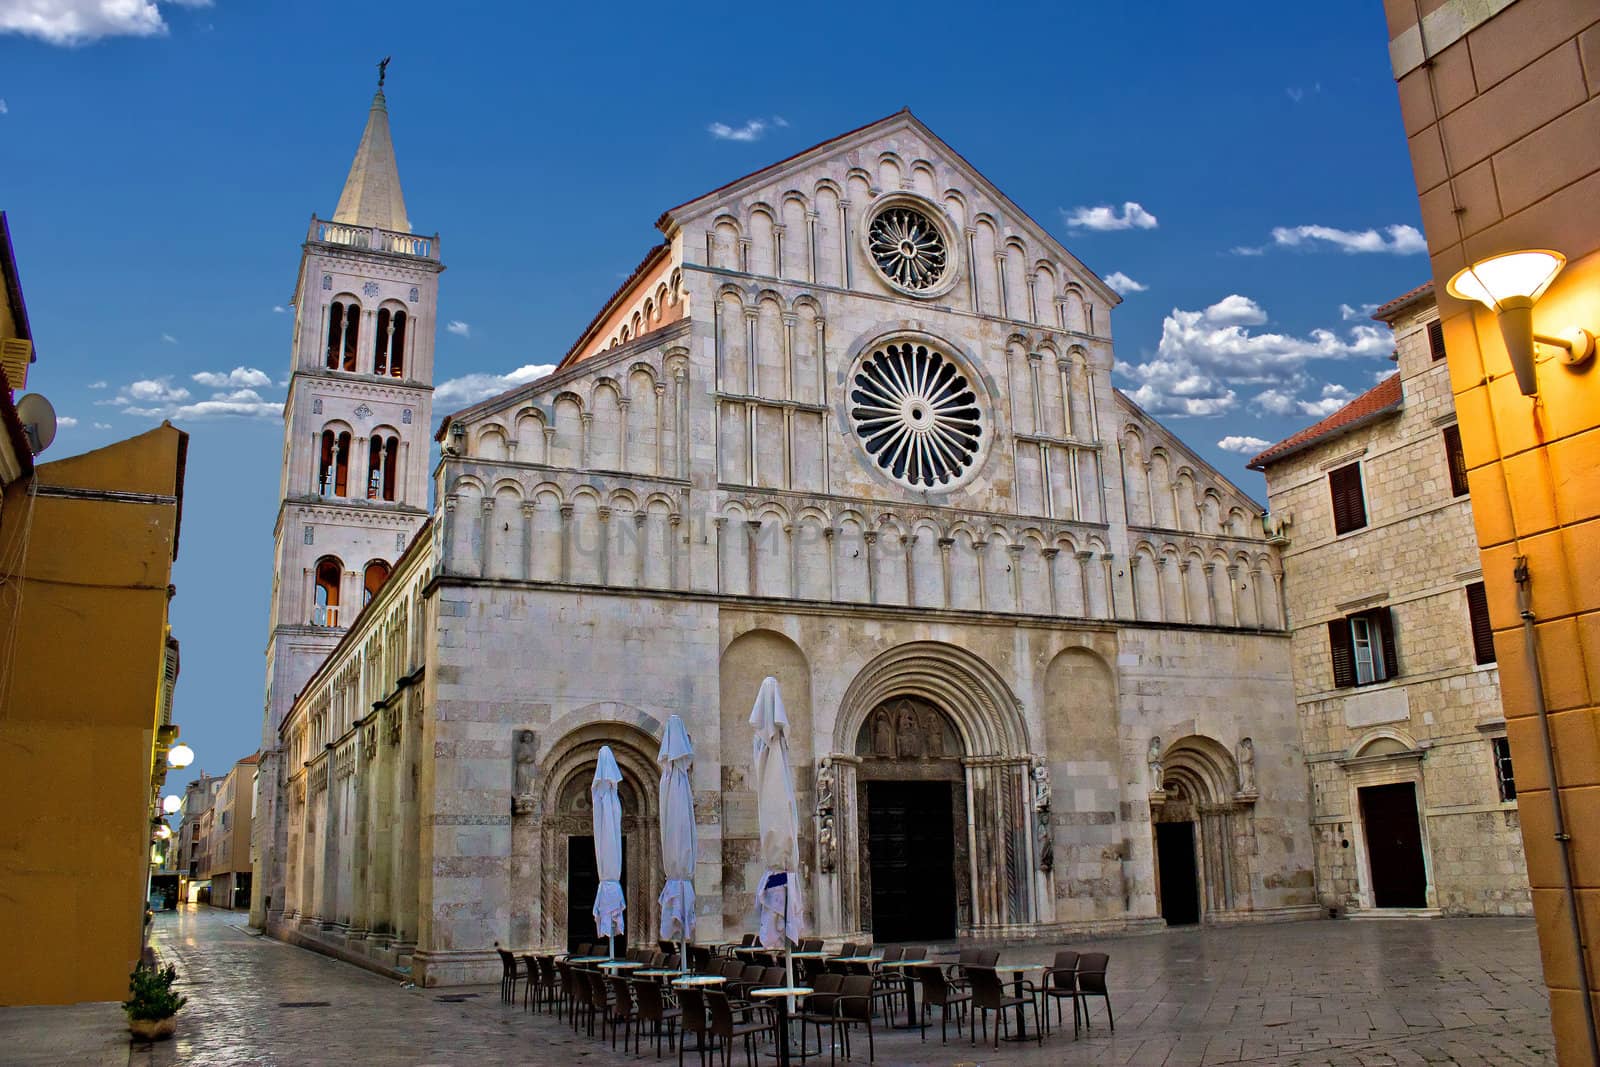 Cathedral of Zadar, Calle larga, Dalmatia by xbrchx